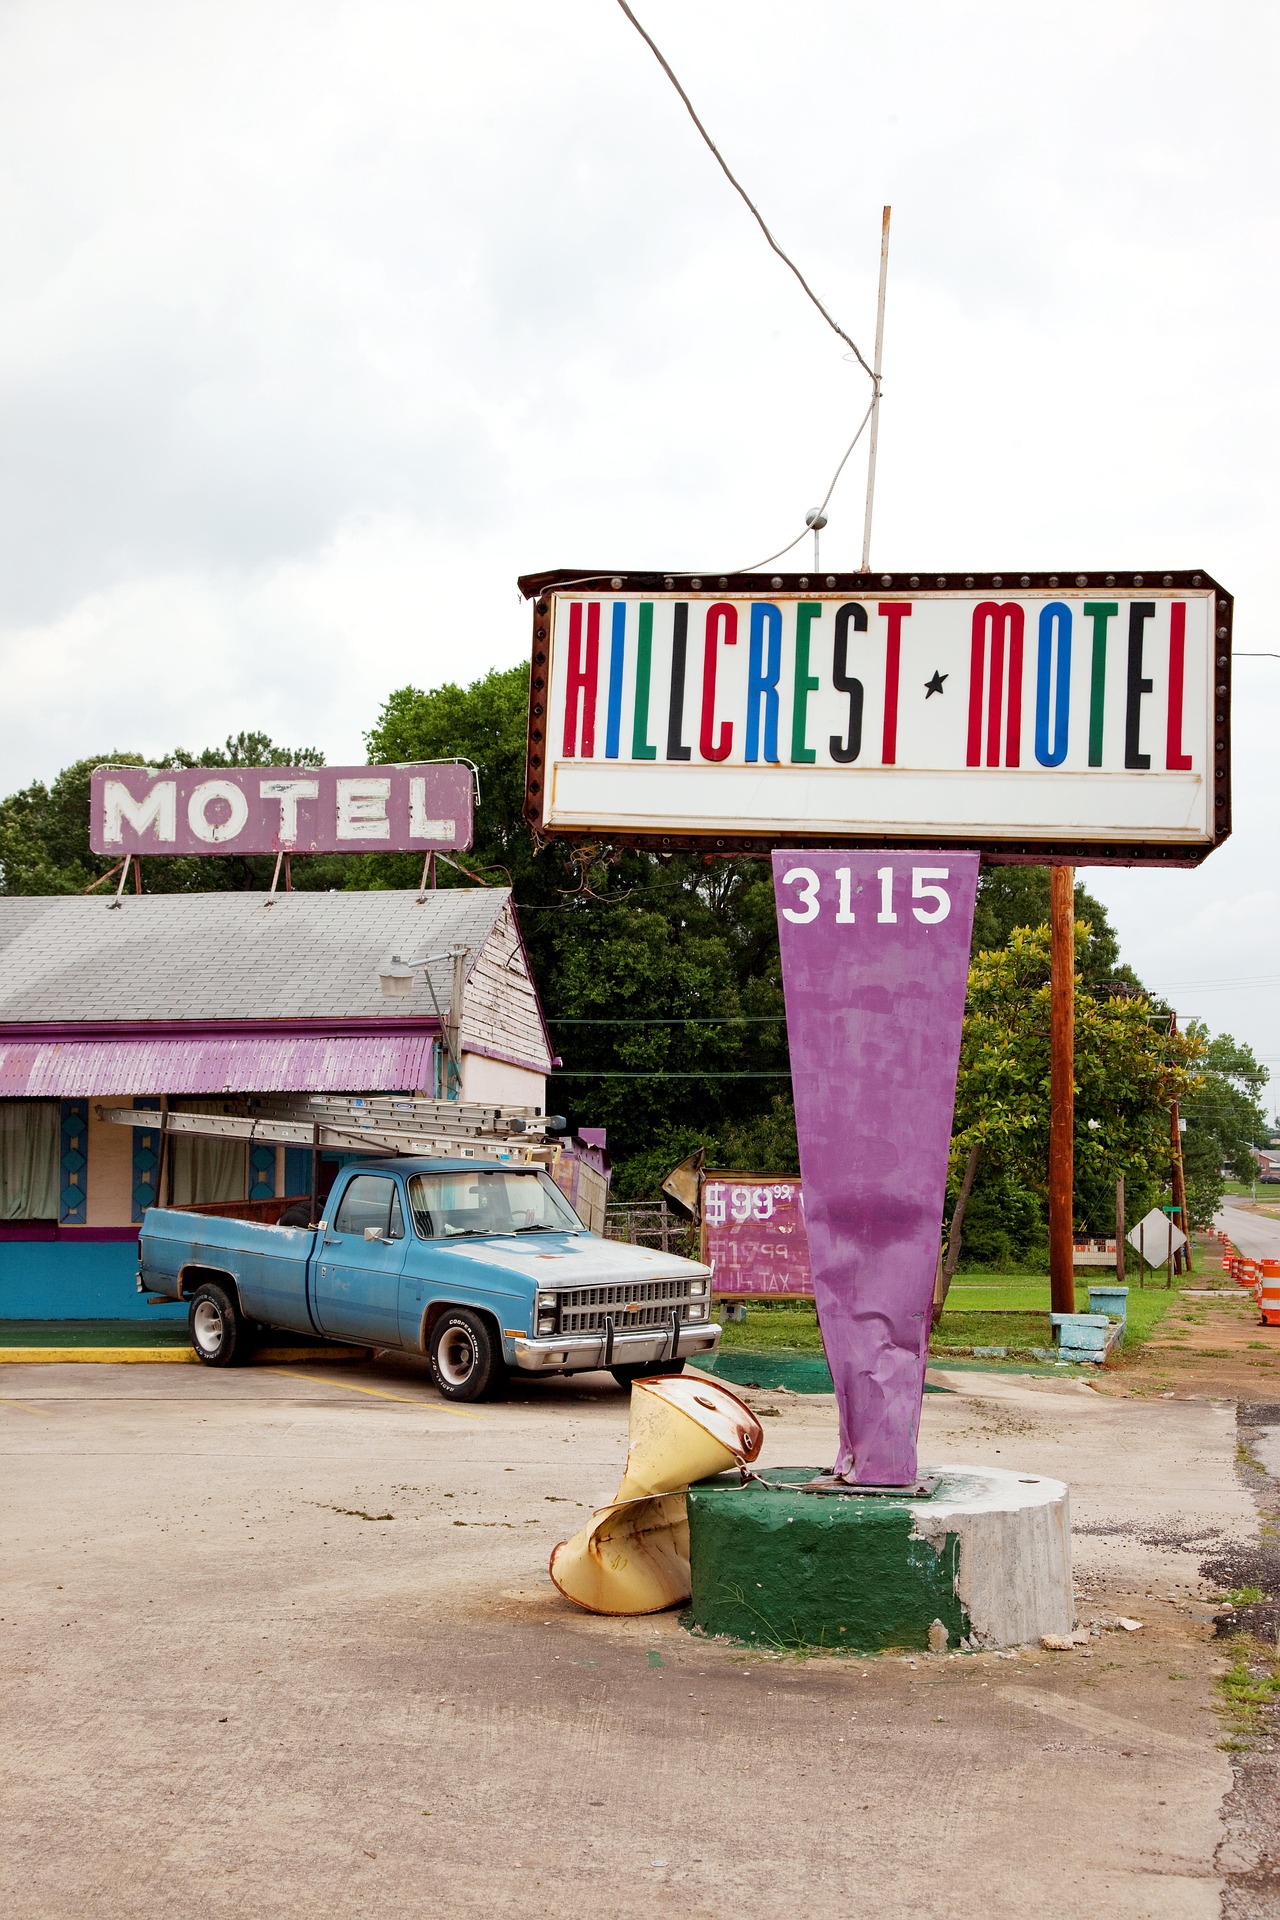 Hillcrest motel photo